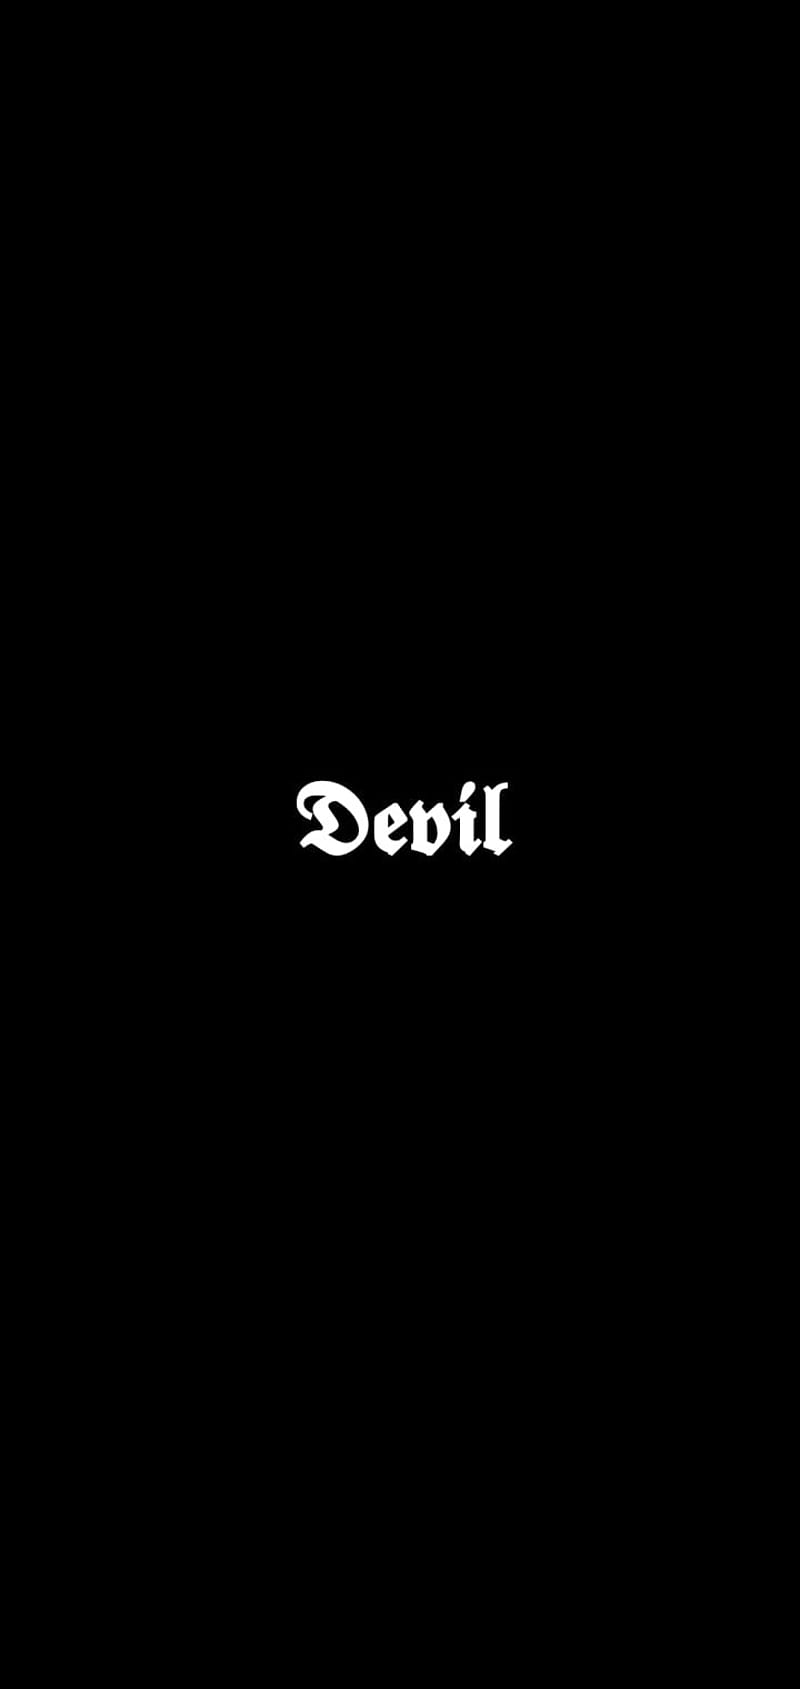 Modern devil head logo concept Royalty Free Vector Image